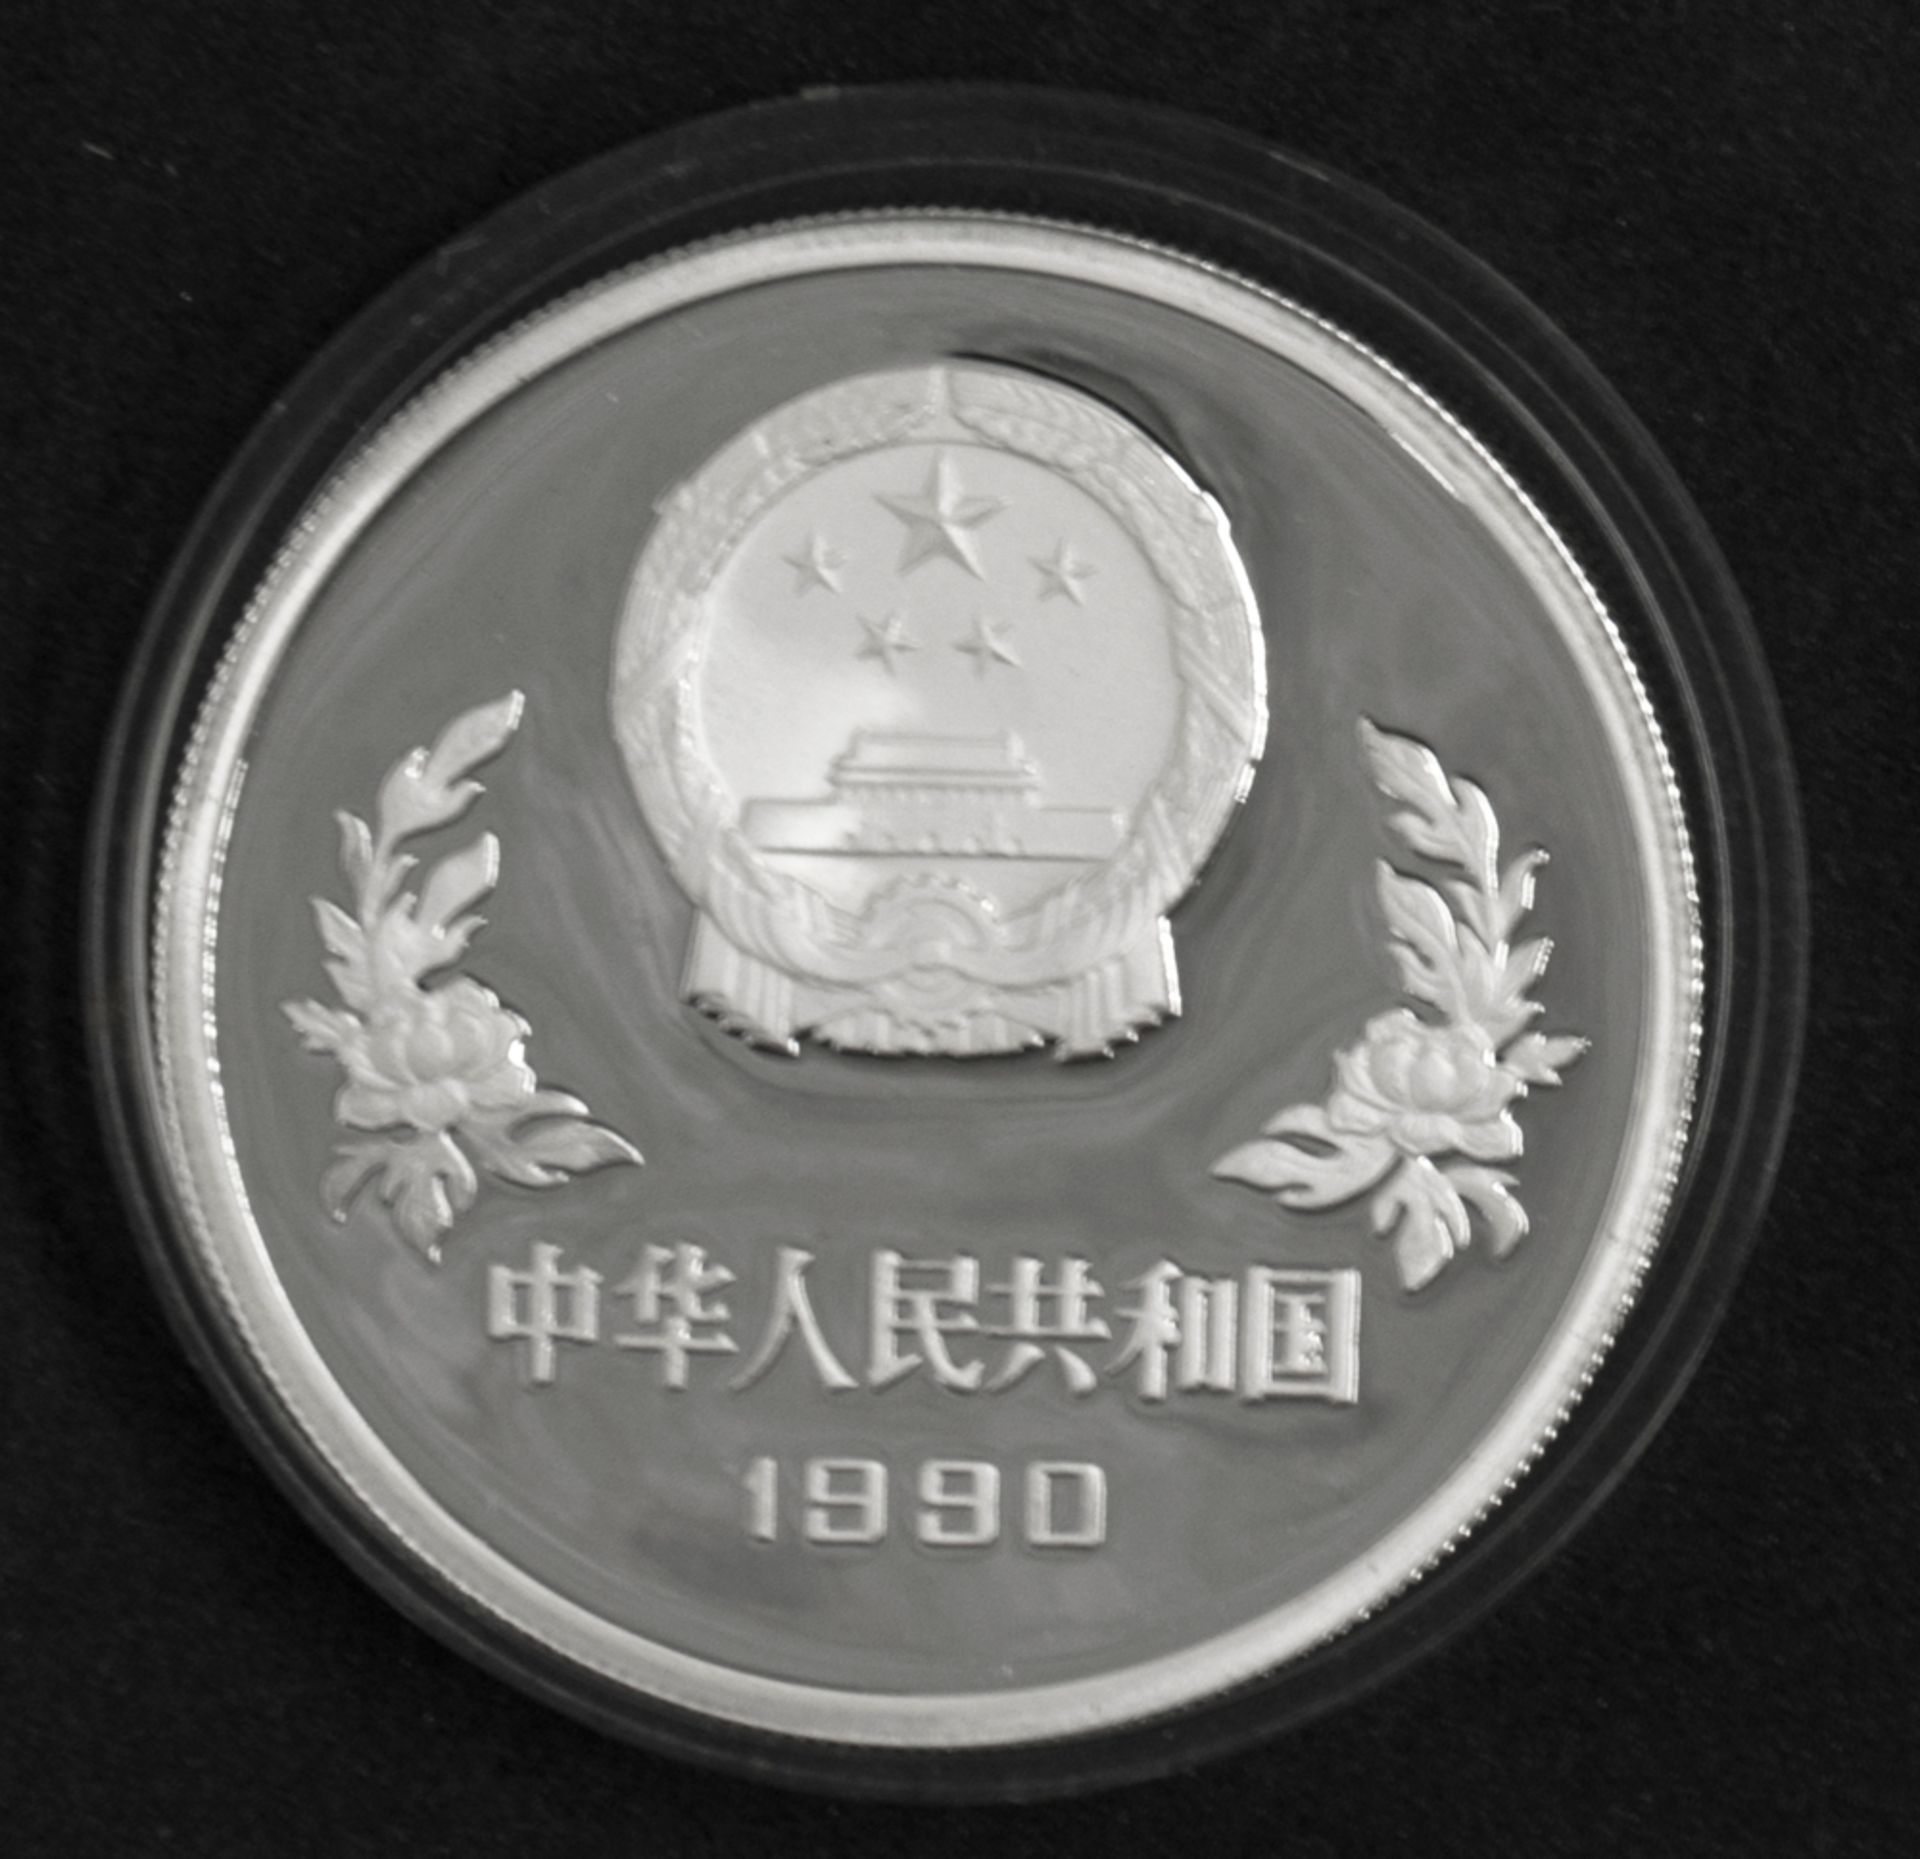 China 1990, 5 Yuan - Silbermünze "Fußball WM 1990". Durchmesser: ca. 39 mm. Gewicht: ca. 27,2 g. - Image 2 of 2